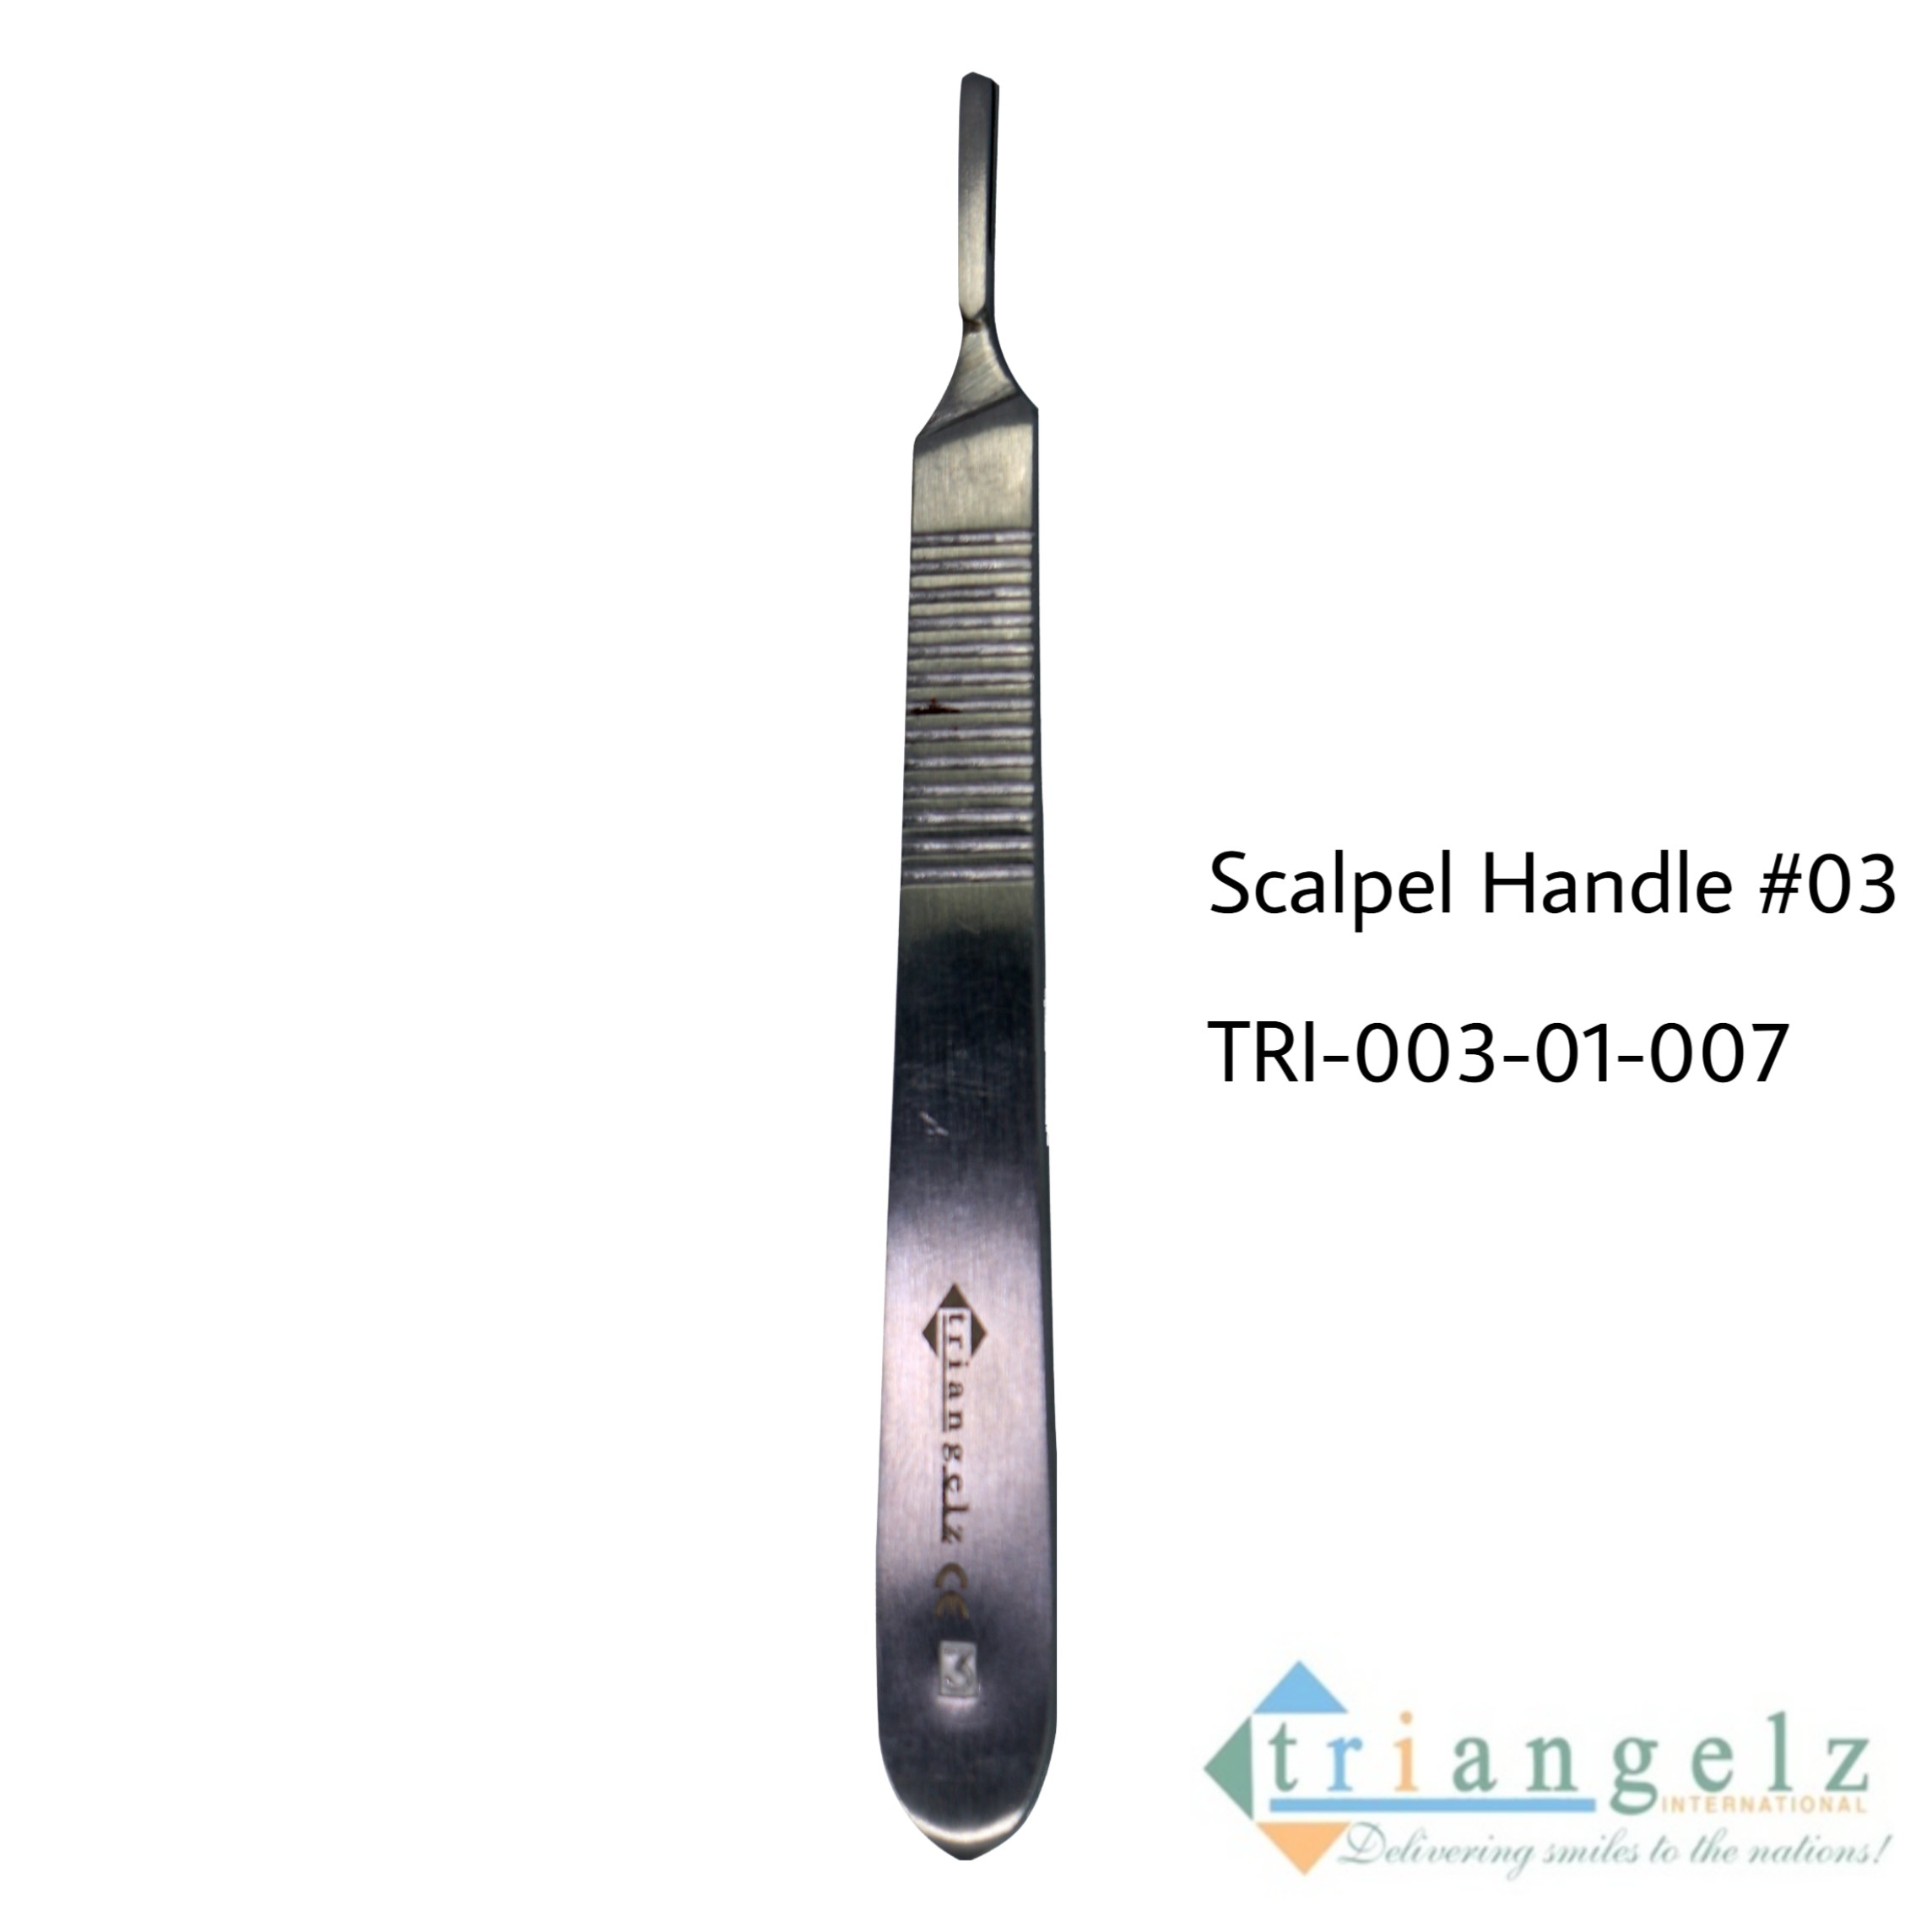 TRI-003-01-007 Scalpel Handle # 03